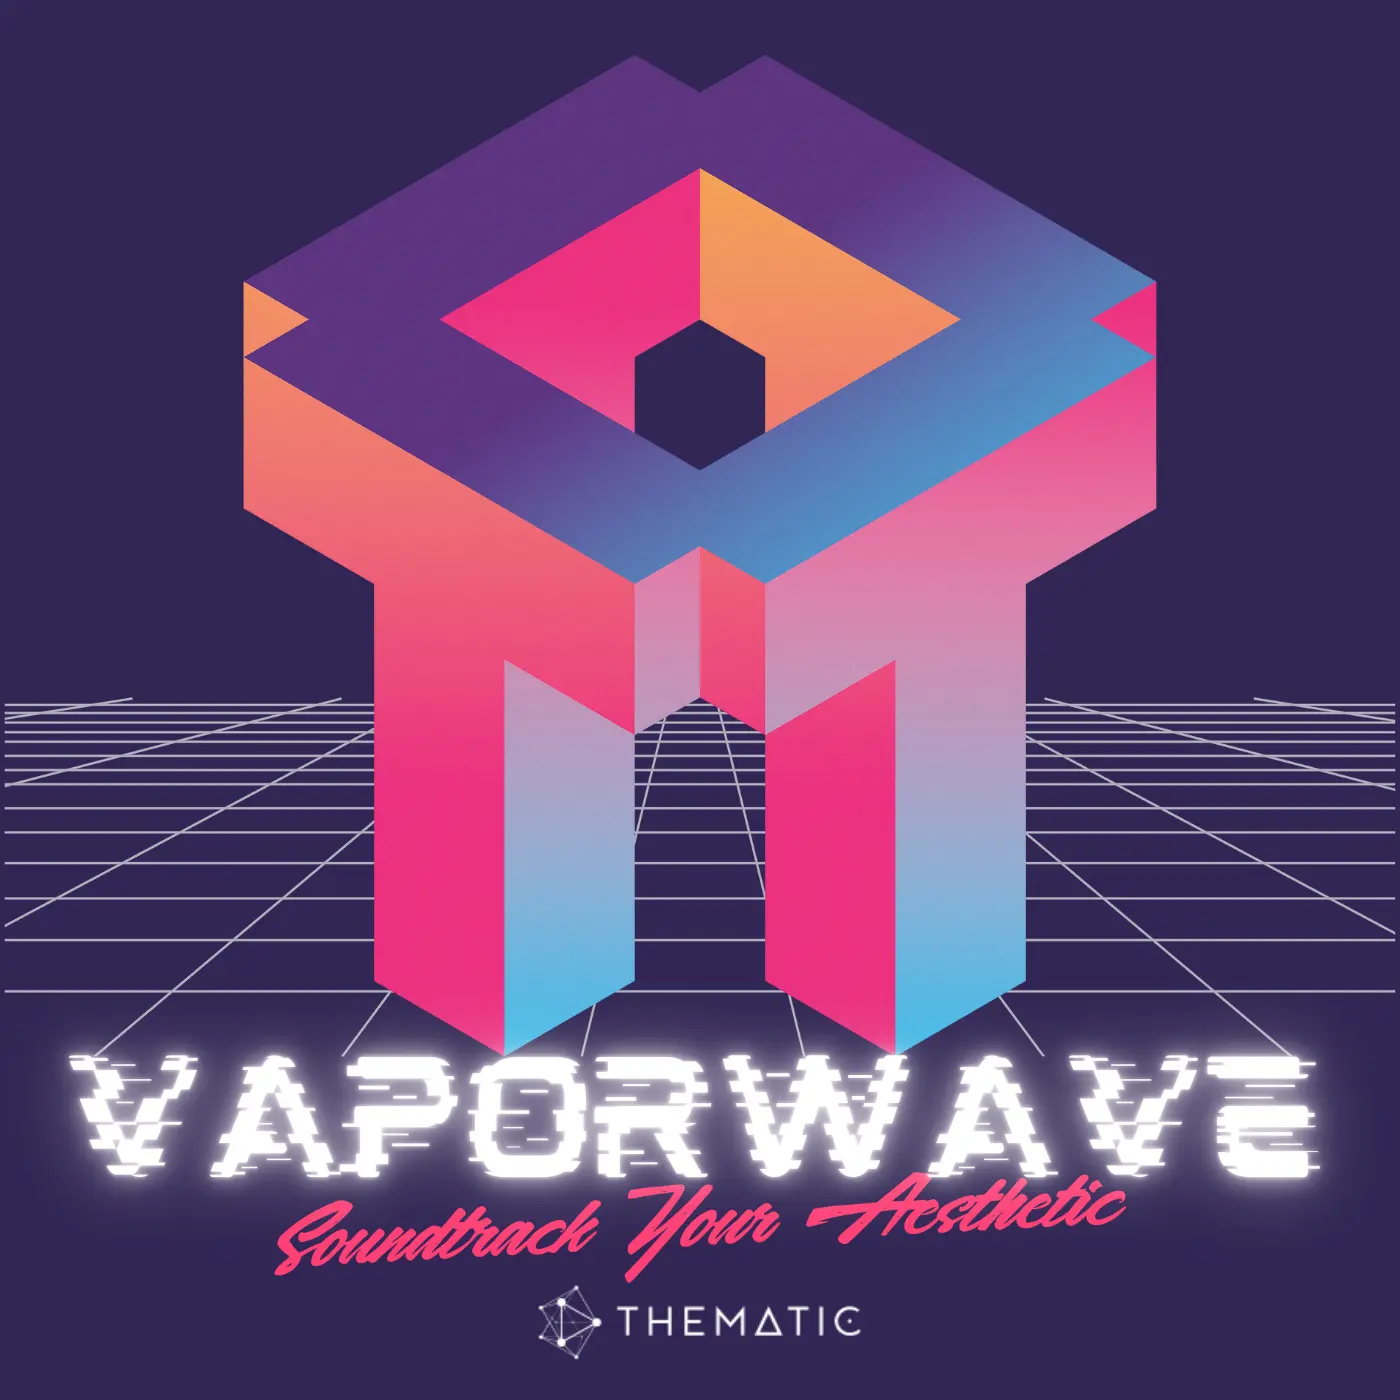 Thematic vaporwave aesthetic playlist